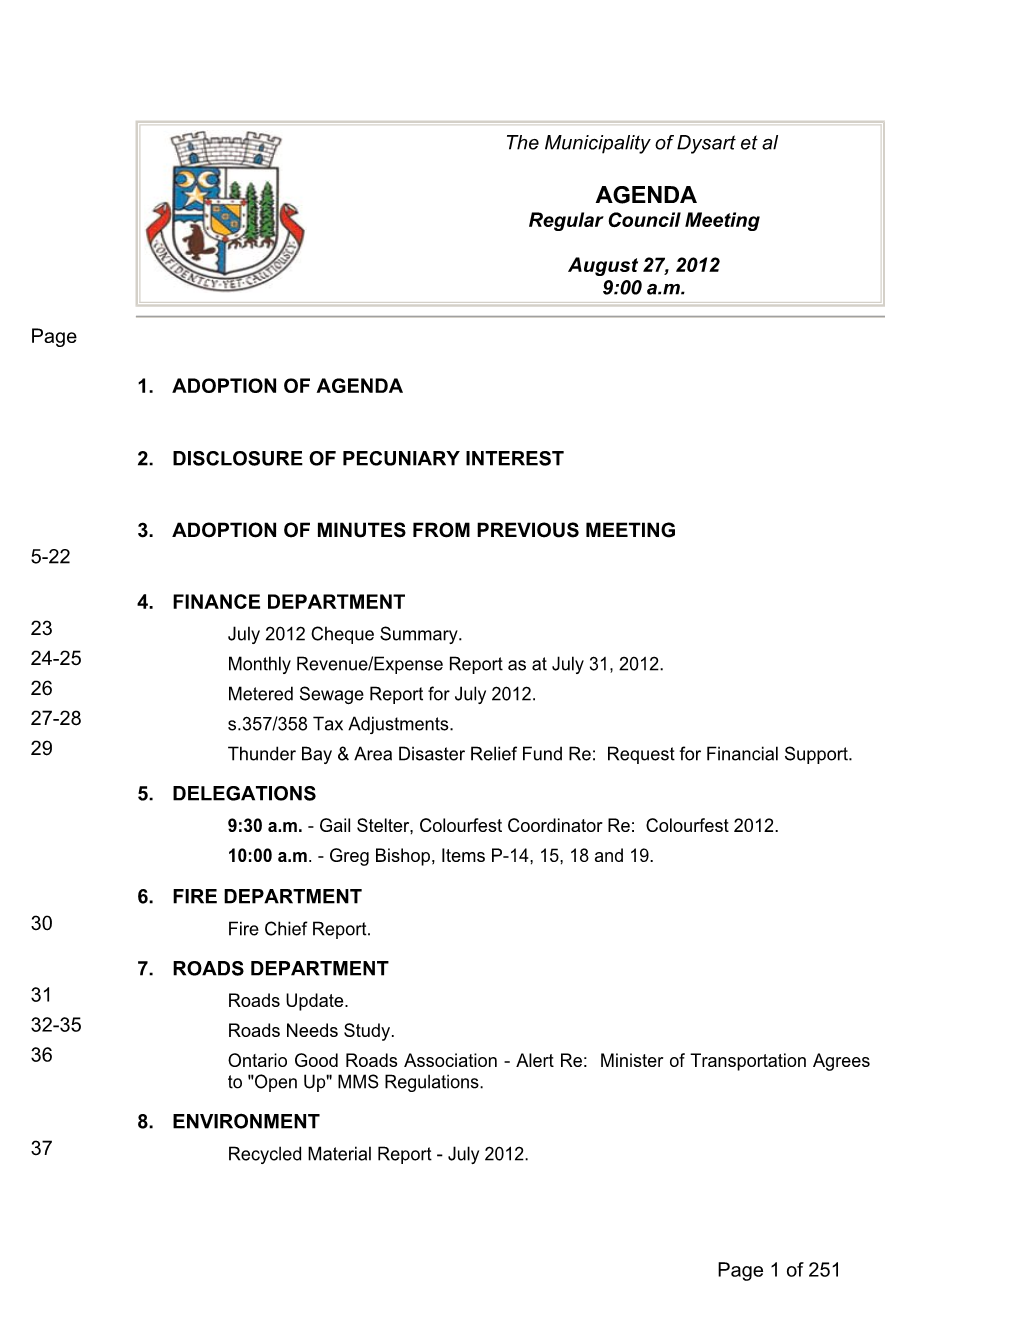 AGENDA Regular Council Meeting